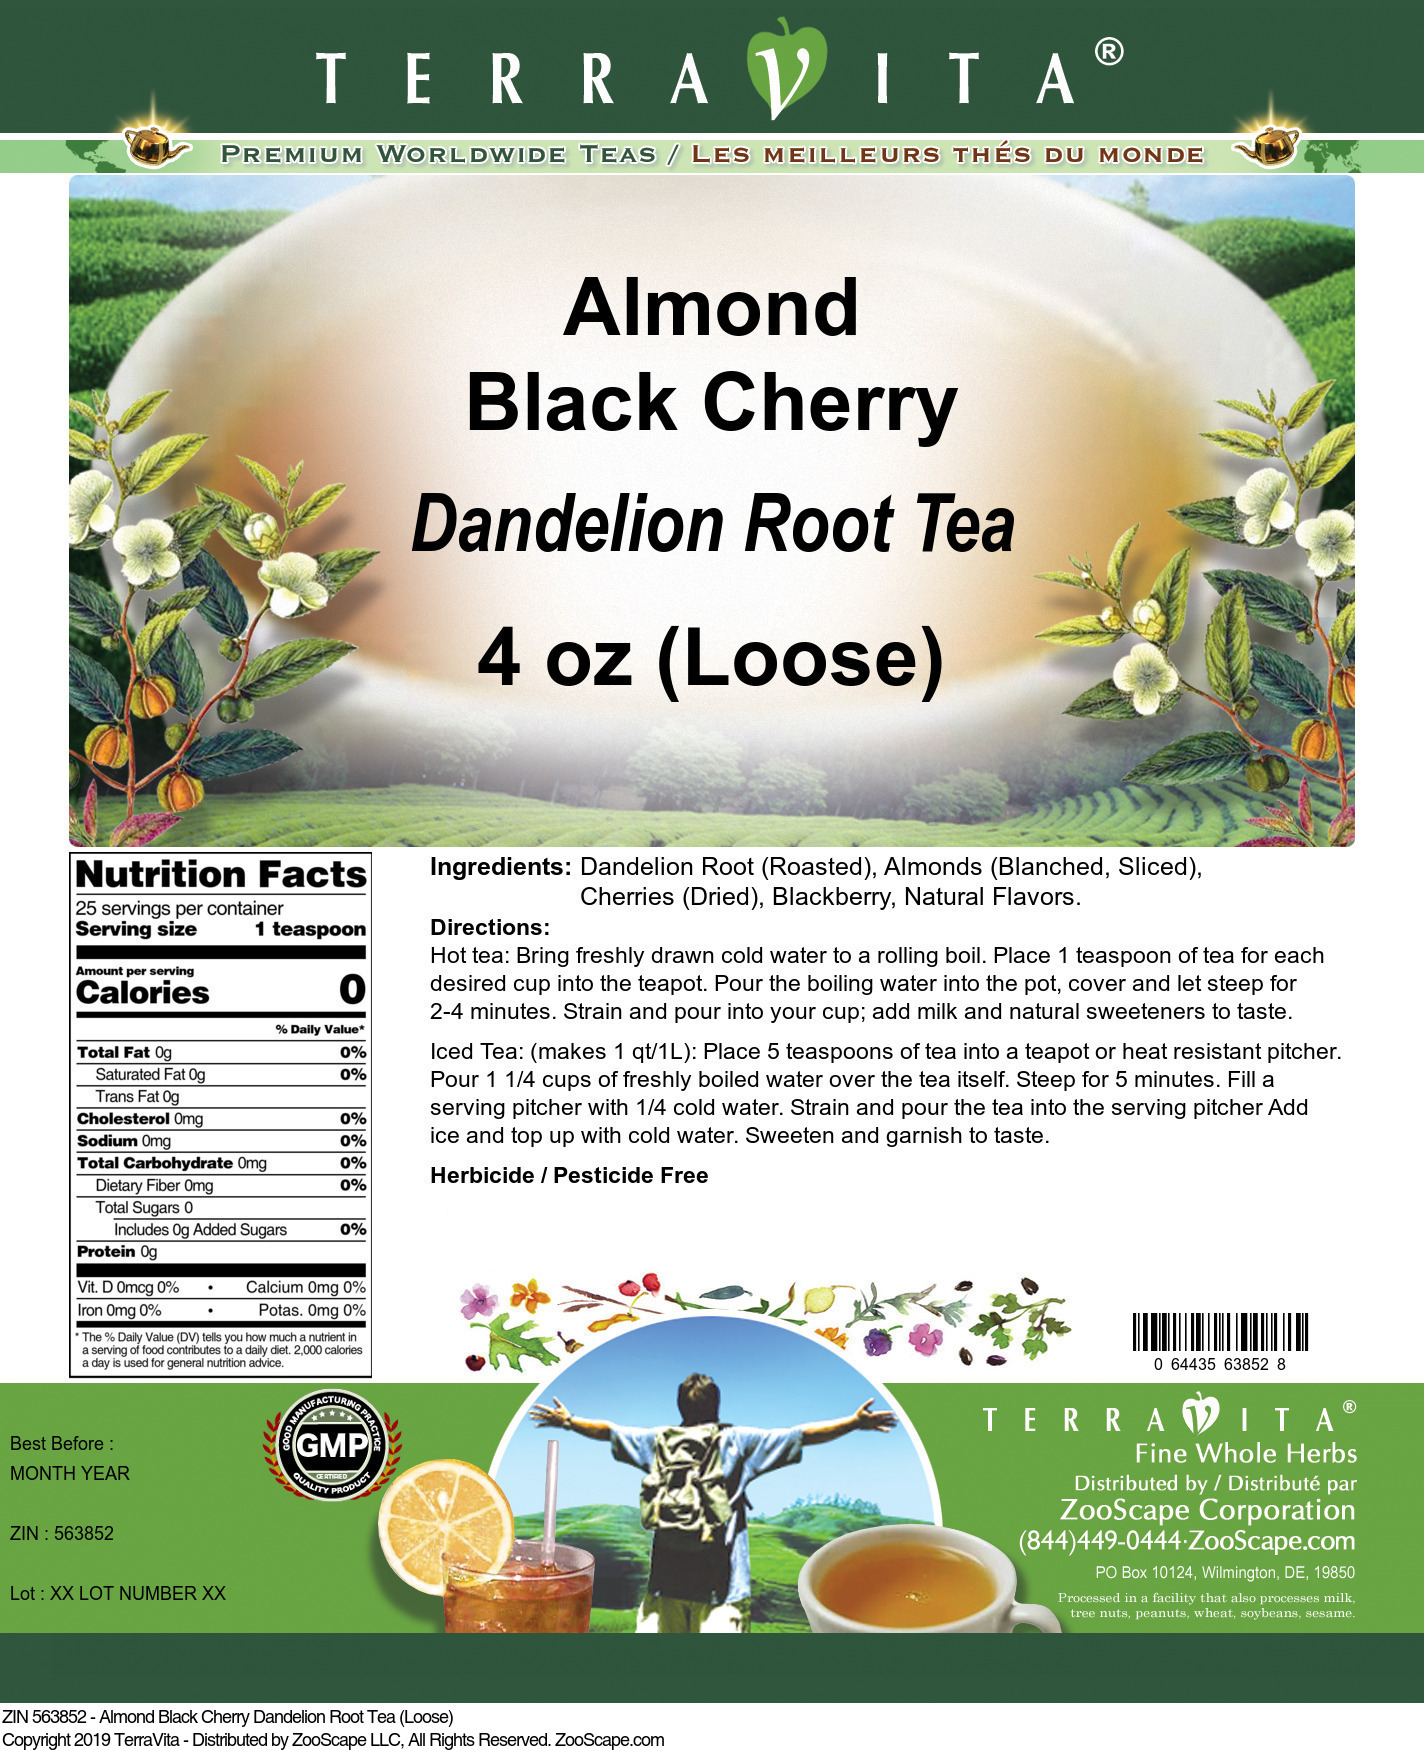 Almond Black Cherry Dandelion Root Tea (Loose) - Label